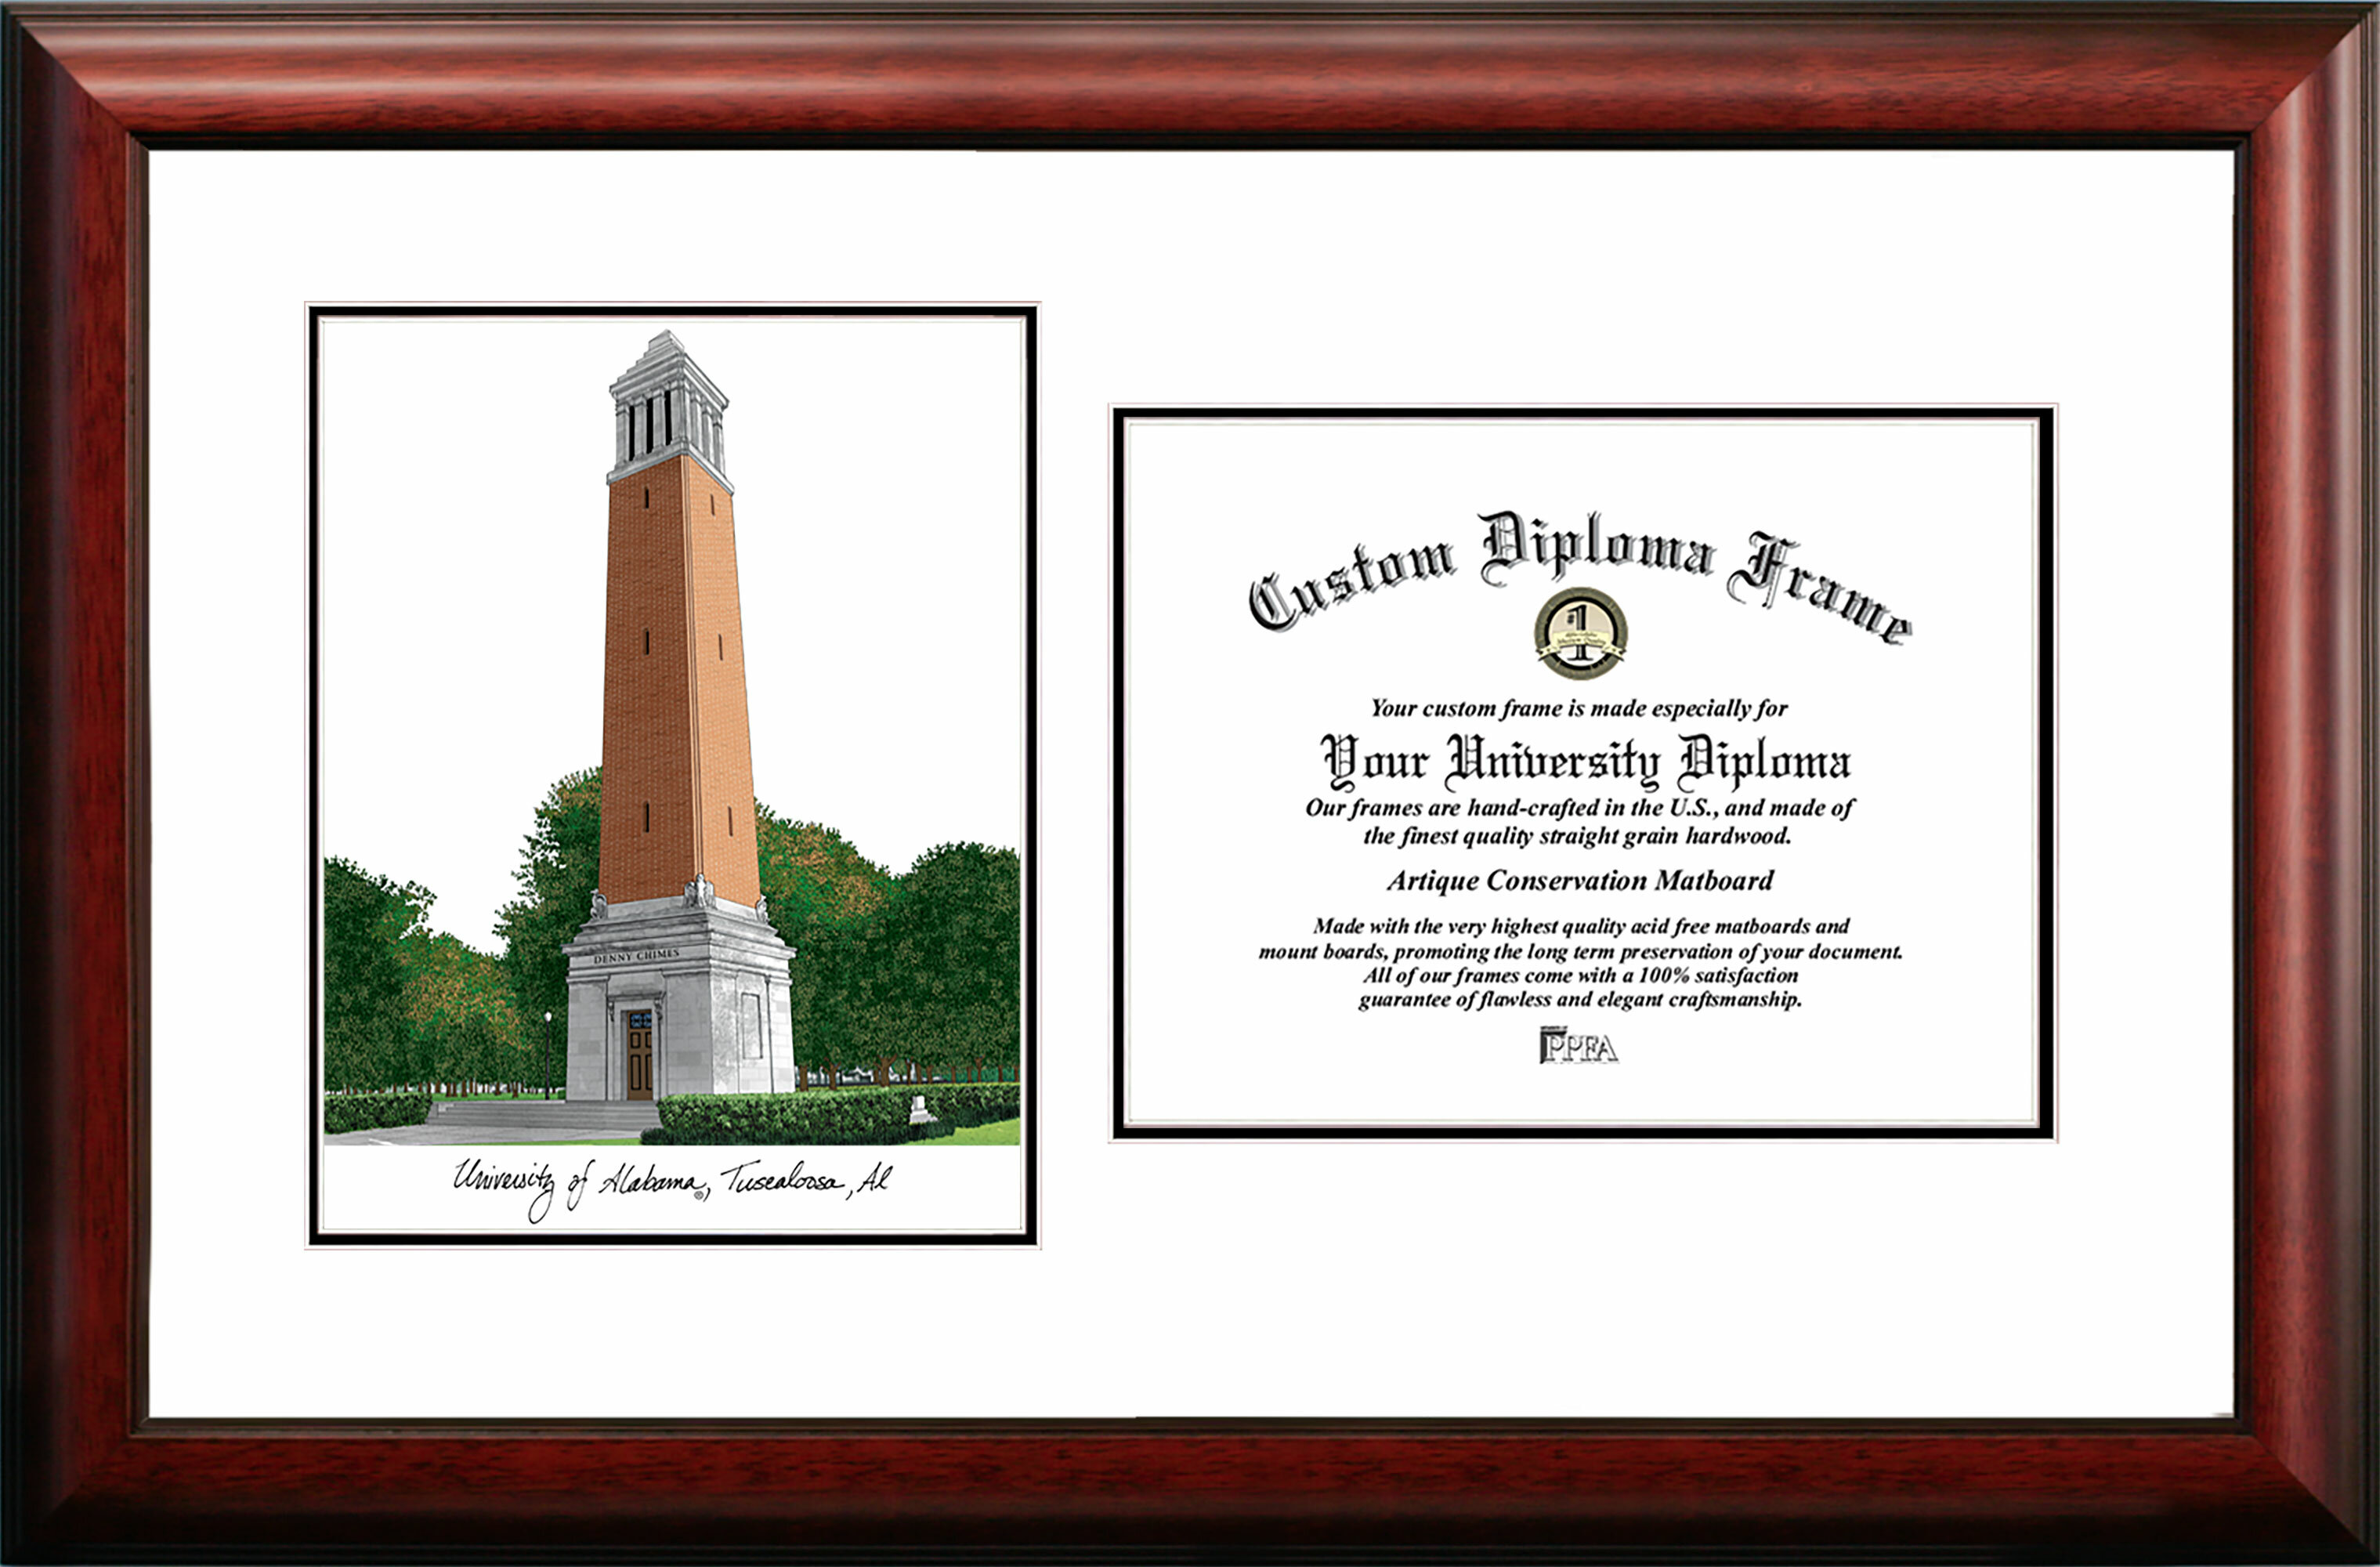 Campus Images NCAA Alabama Crimson Tide Tassel Box and Diploma Frame